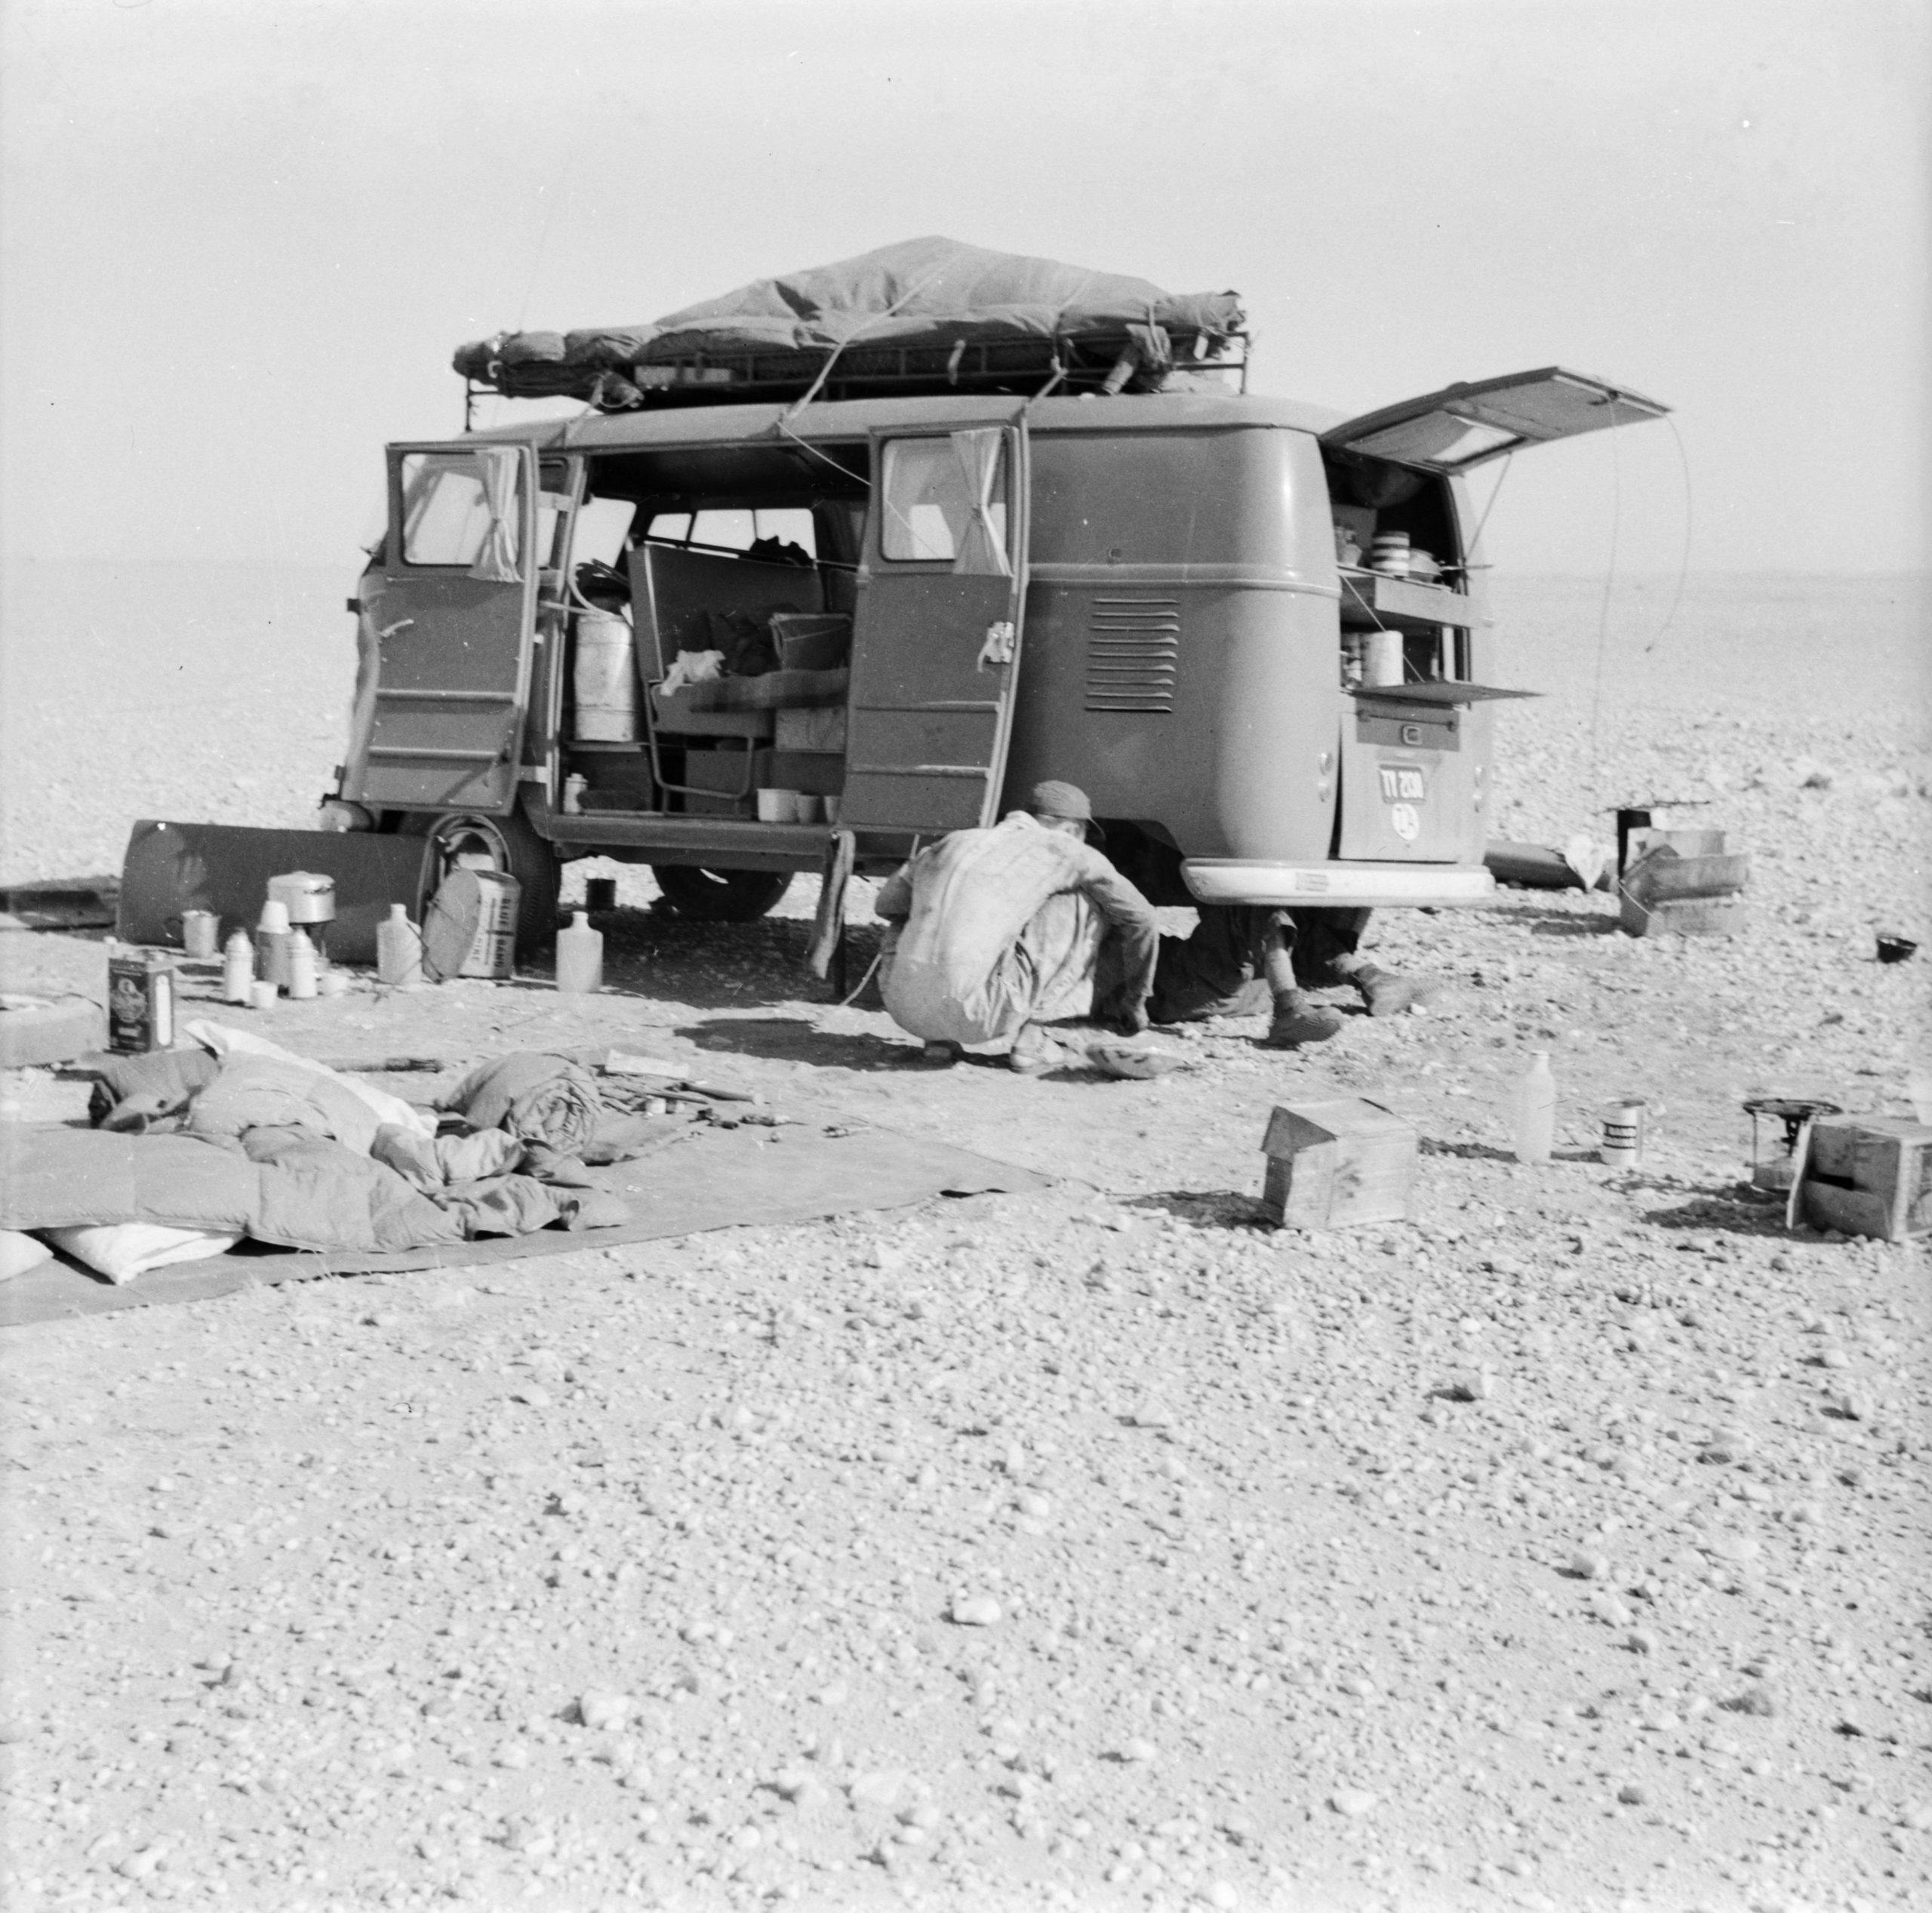 Home is a Journey - Feb 25 Desert car repairs